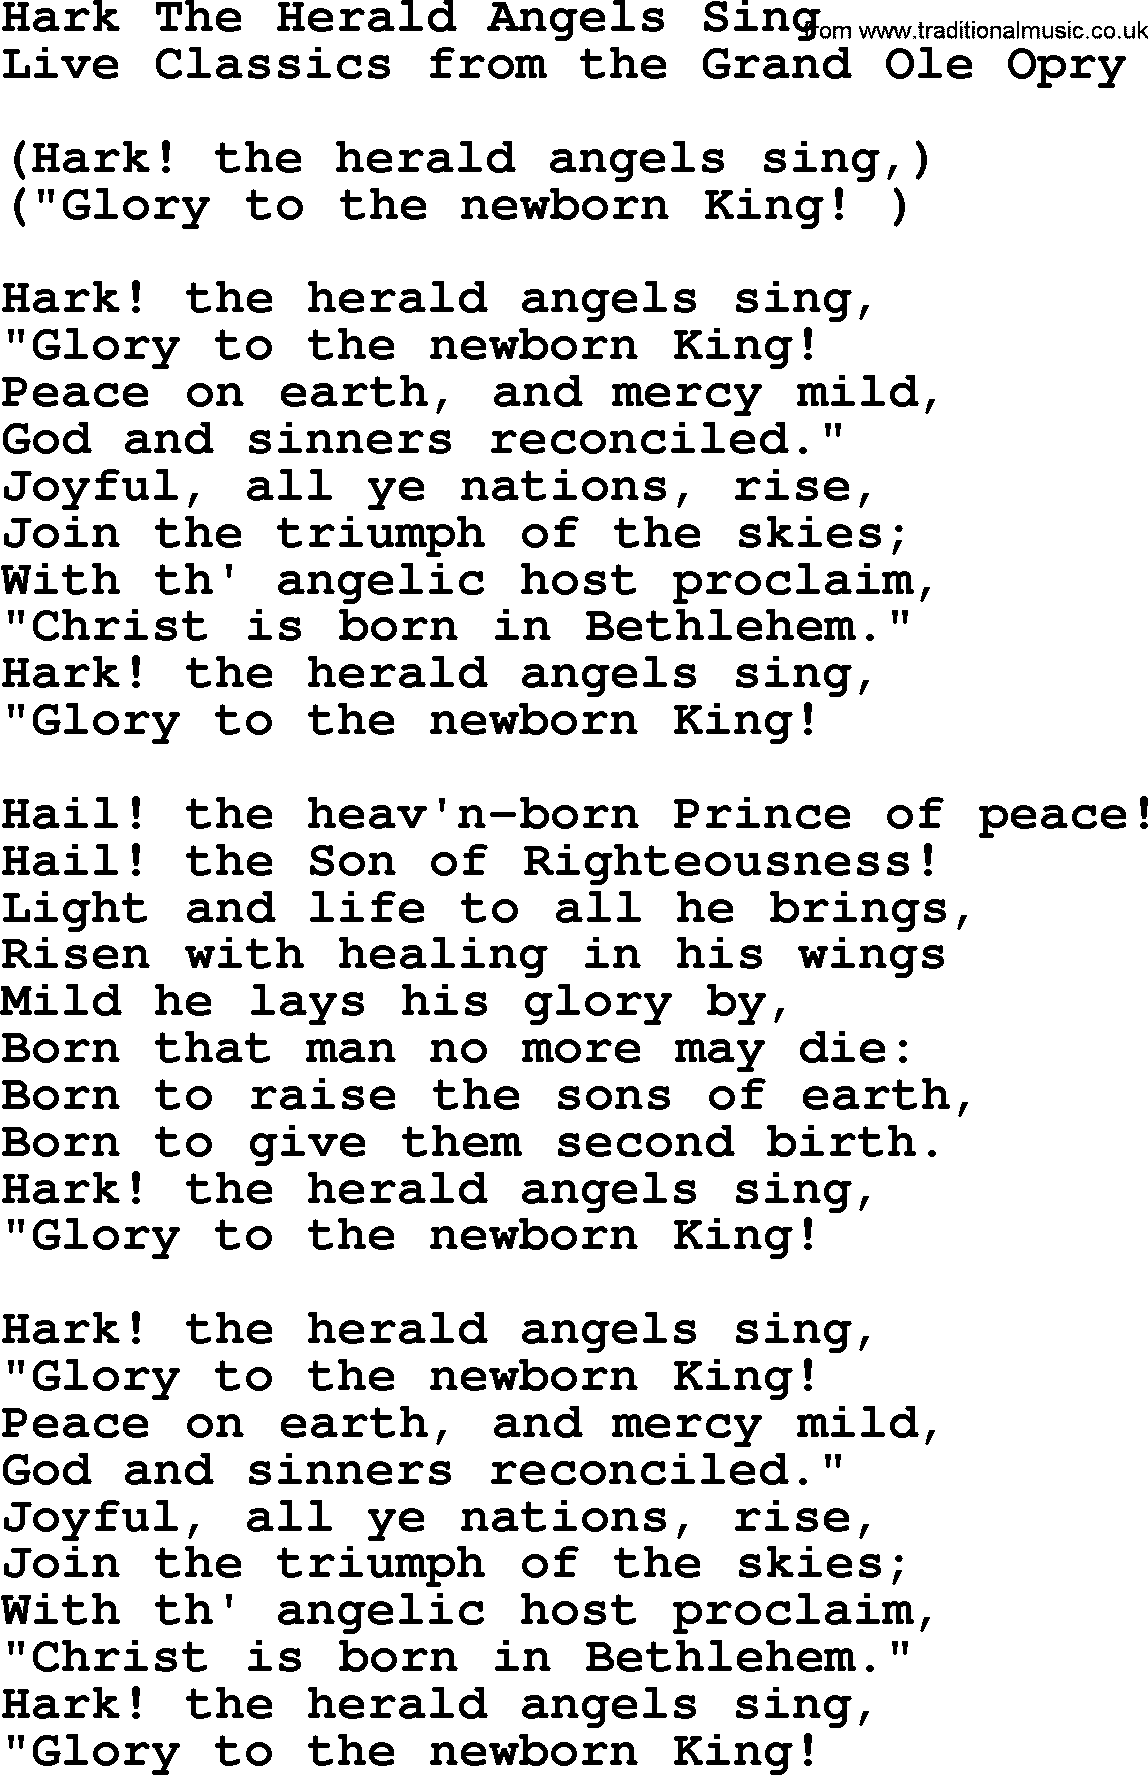 Hark The Herald Angels Sing, by Marty Robbins lyrics